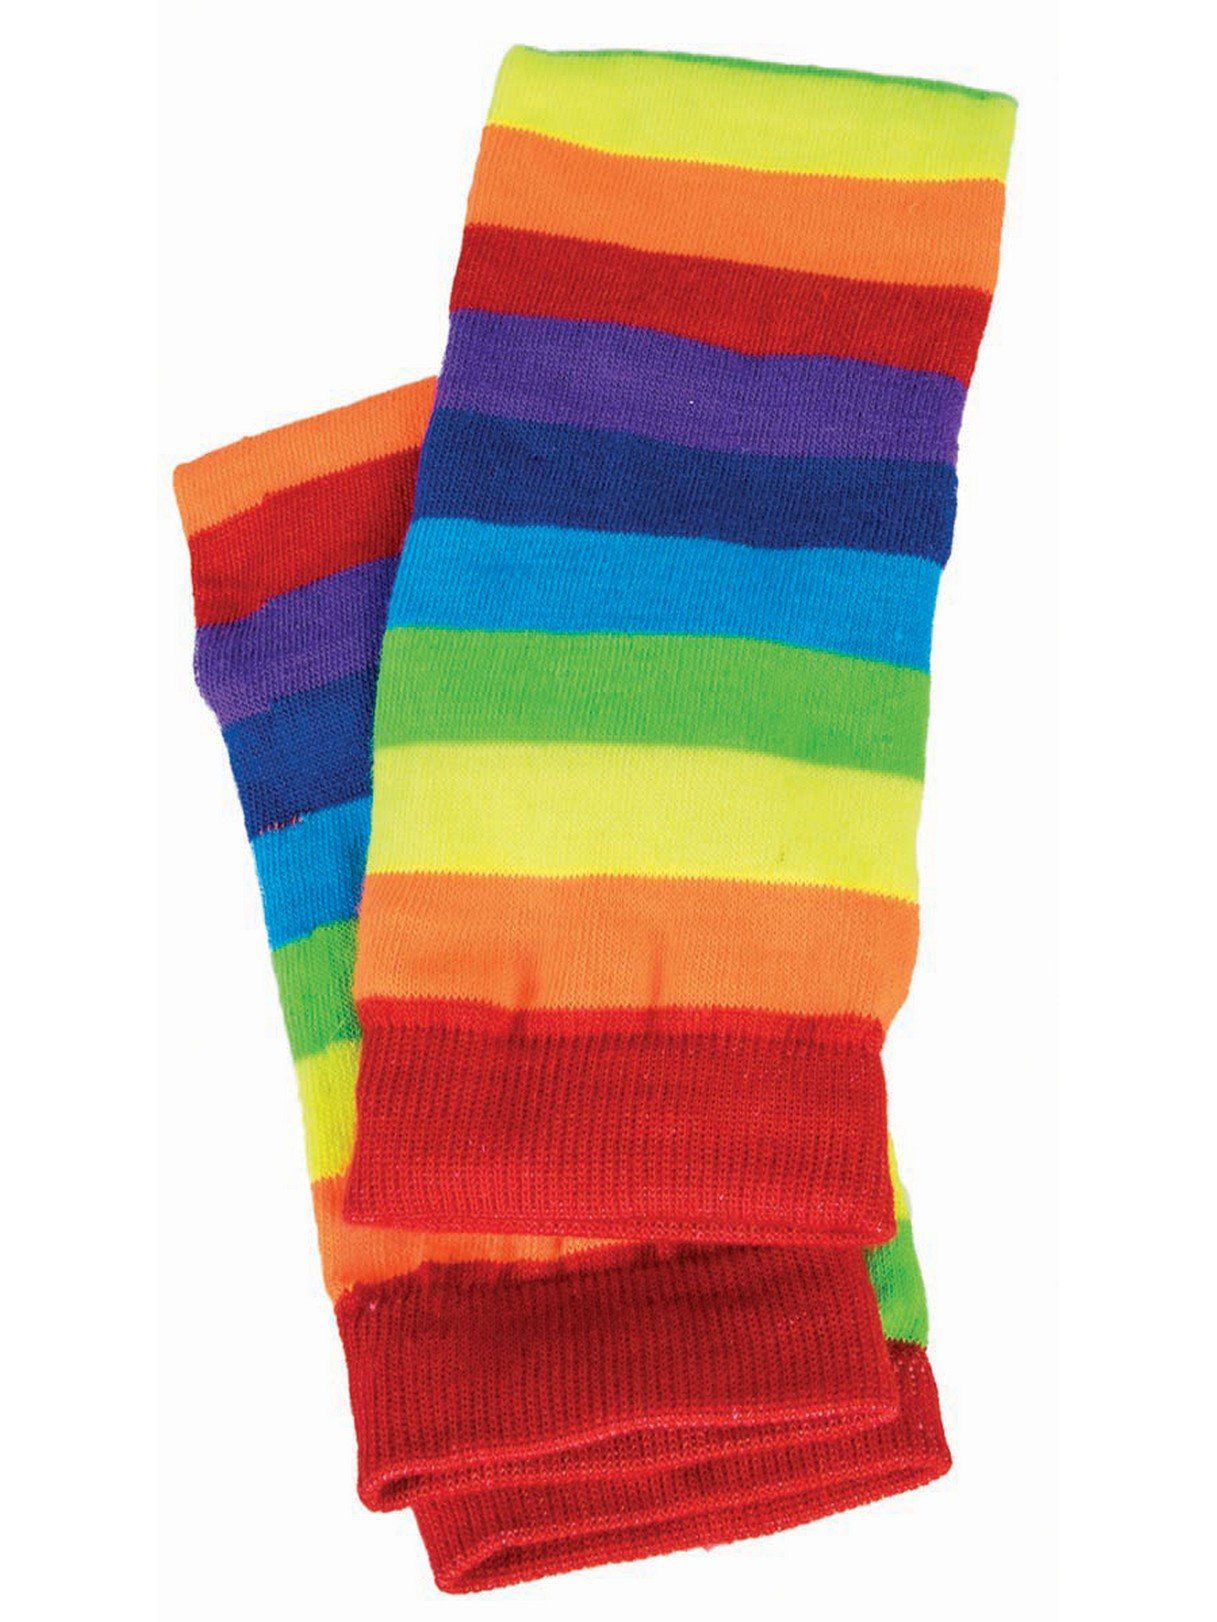 Rainbow Leg Warmers